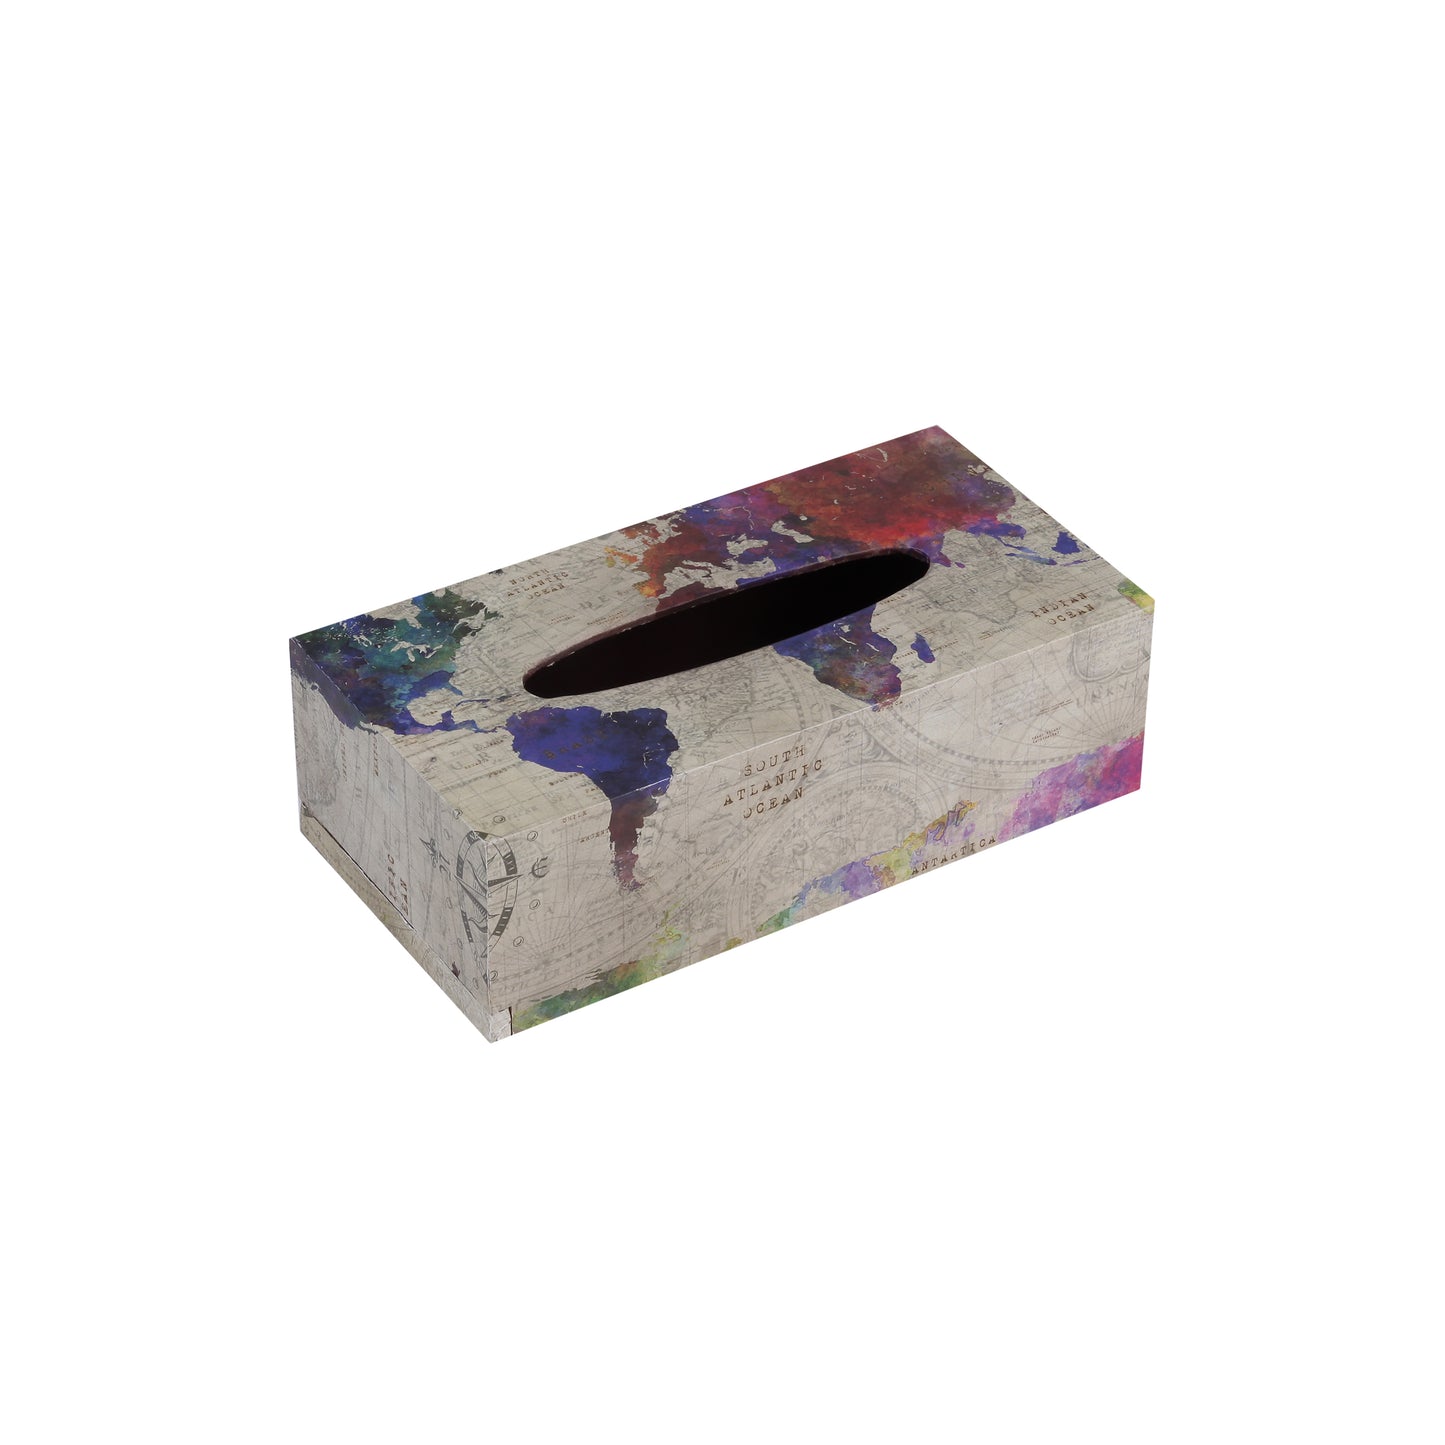 A Tiny Mistake Atlas Rectangle Tissue Box, 26 x 13 x 8 cm